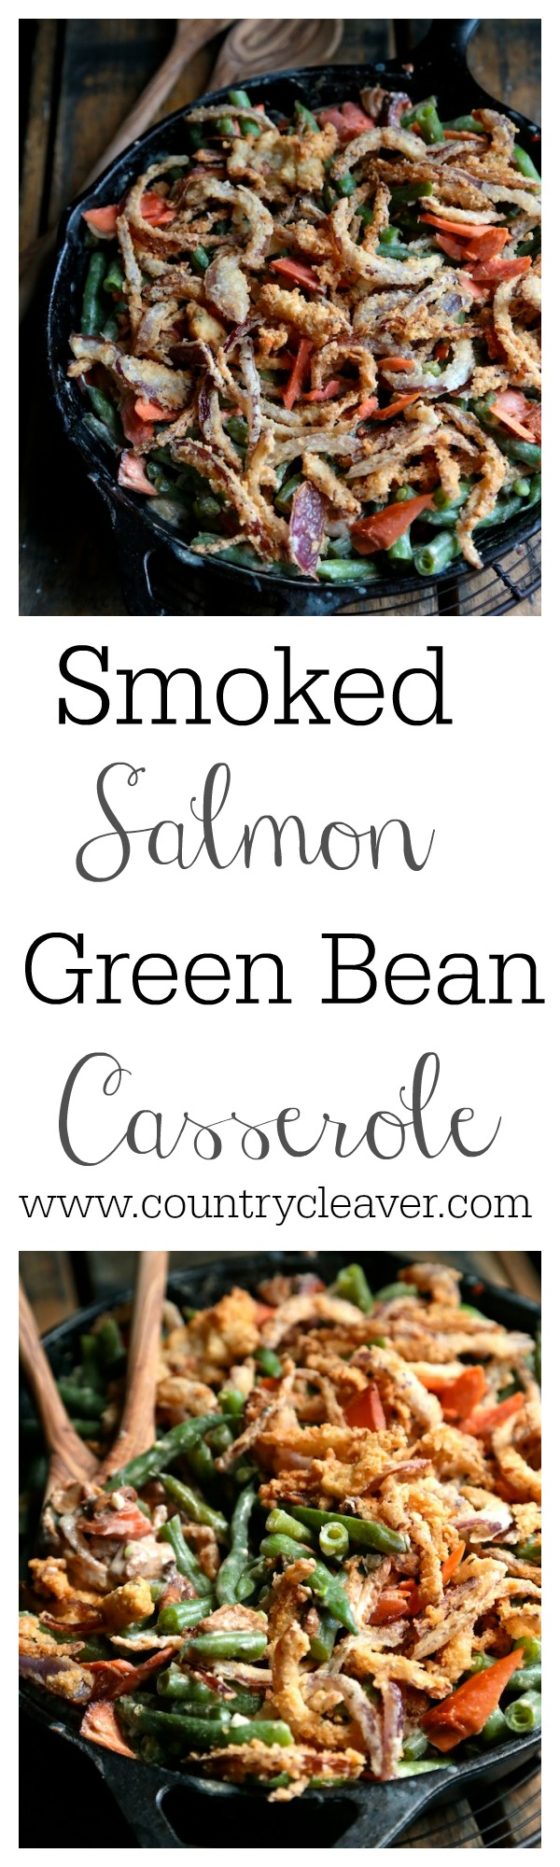 Smoked Salmon Green Bean Casserole